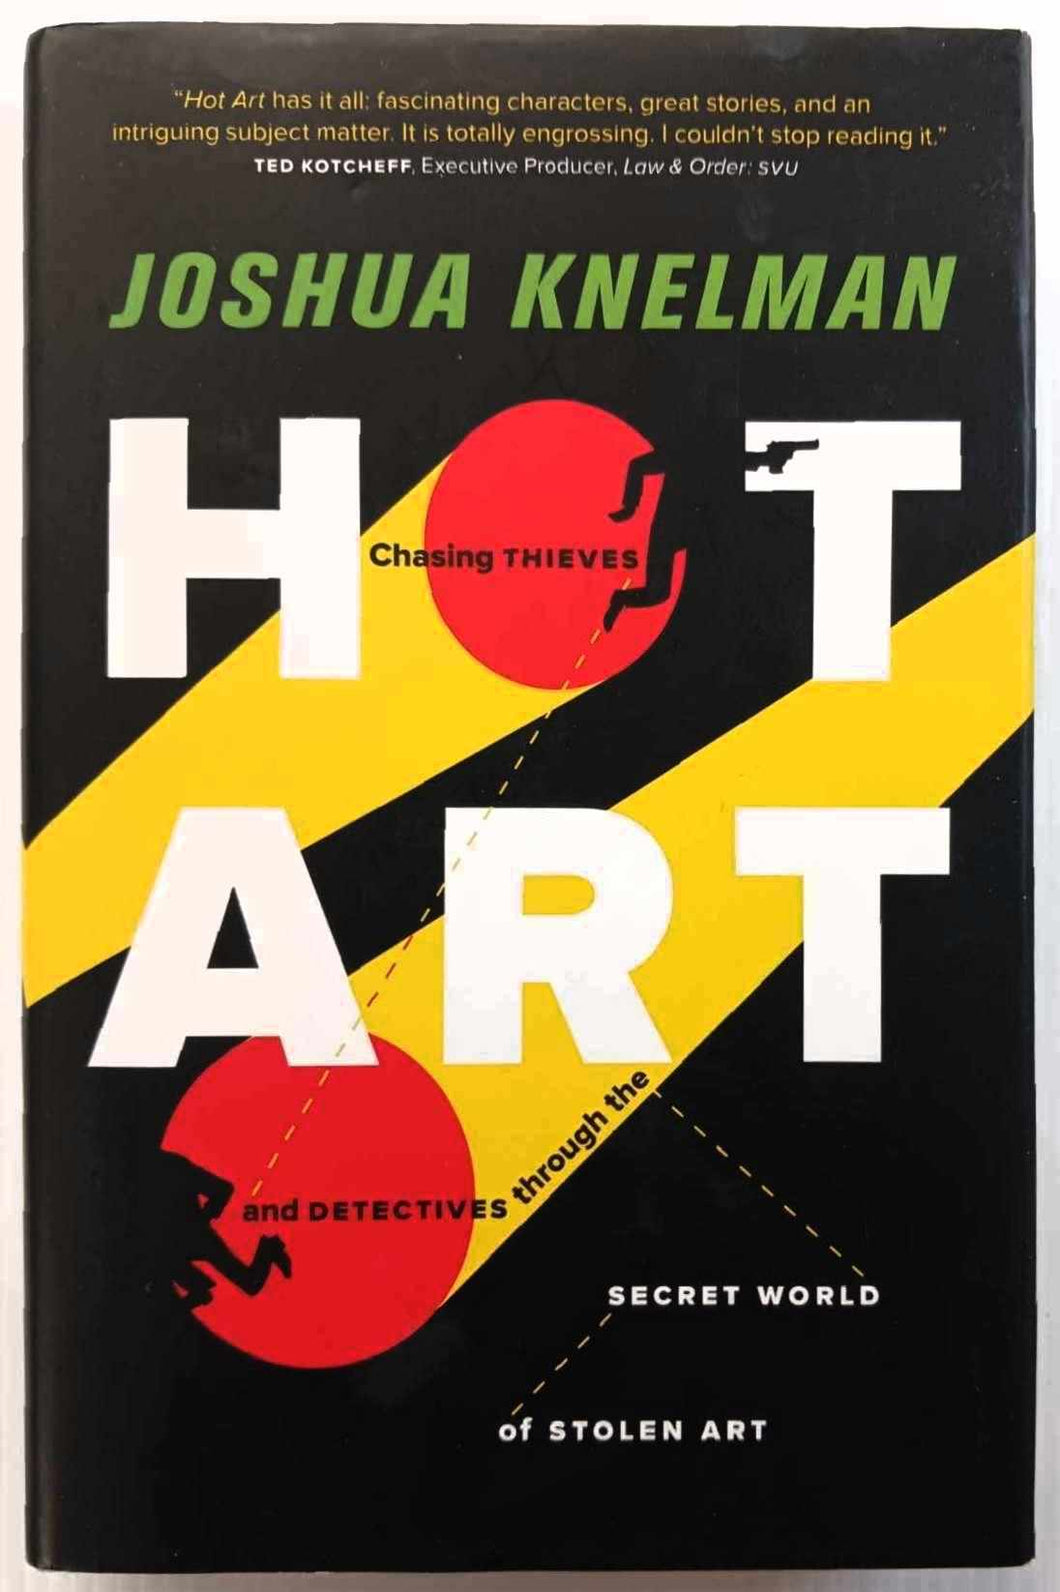 HOT ART - Joshua Knelman